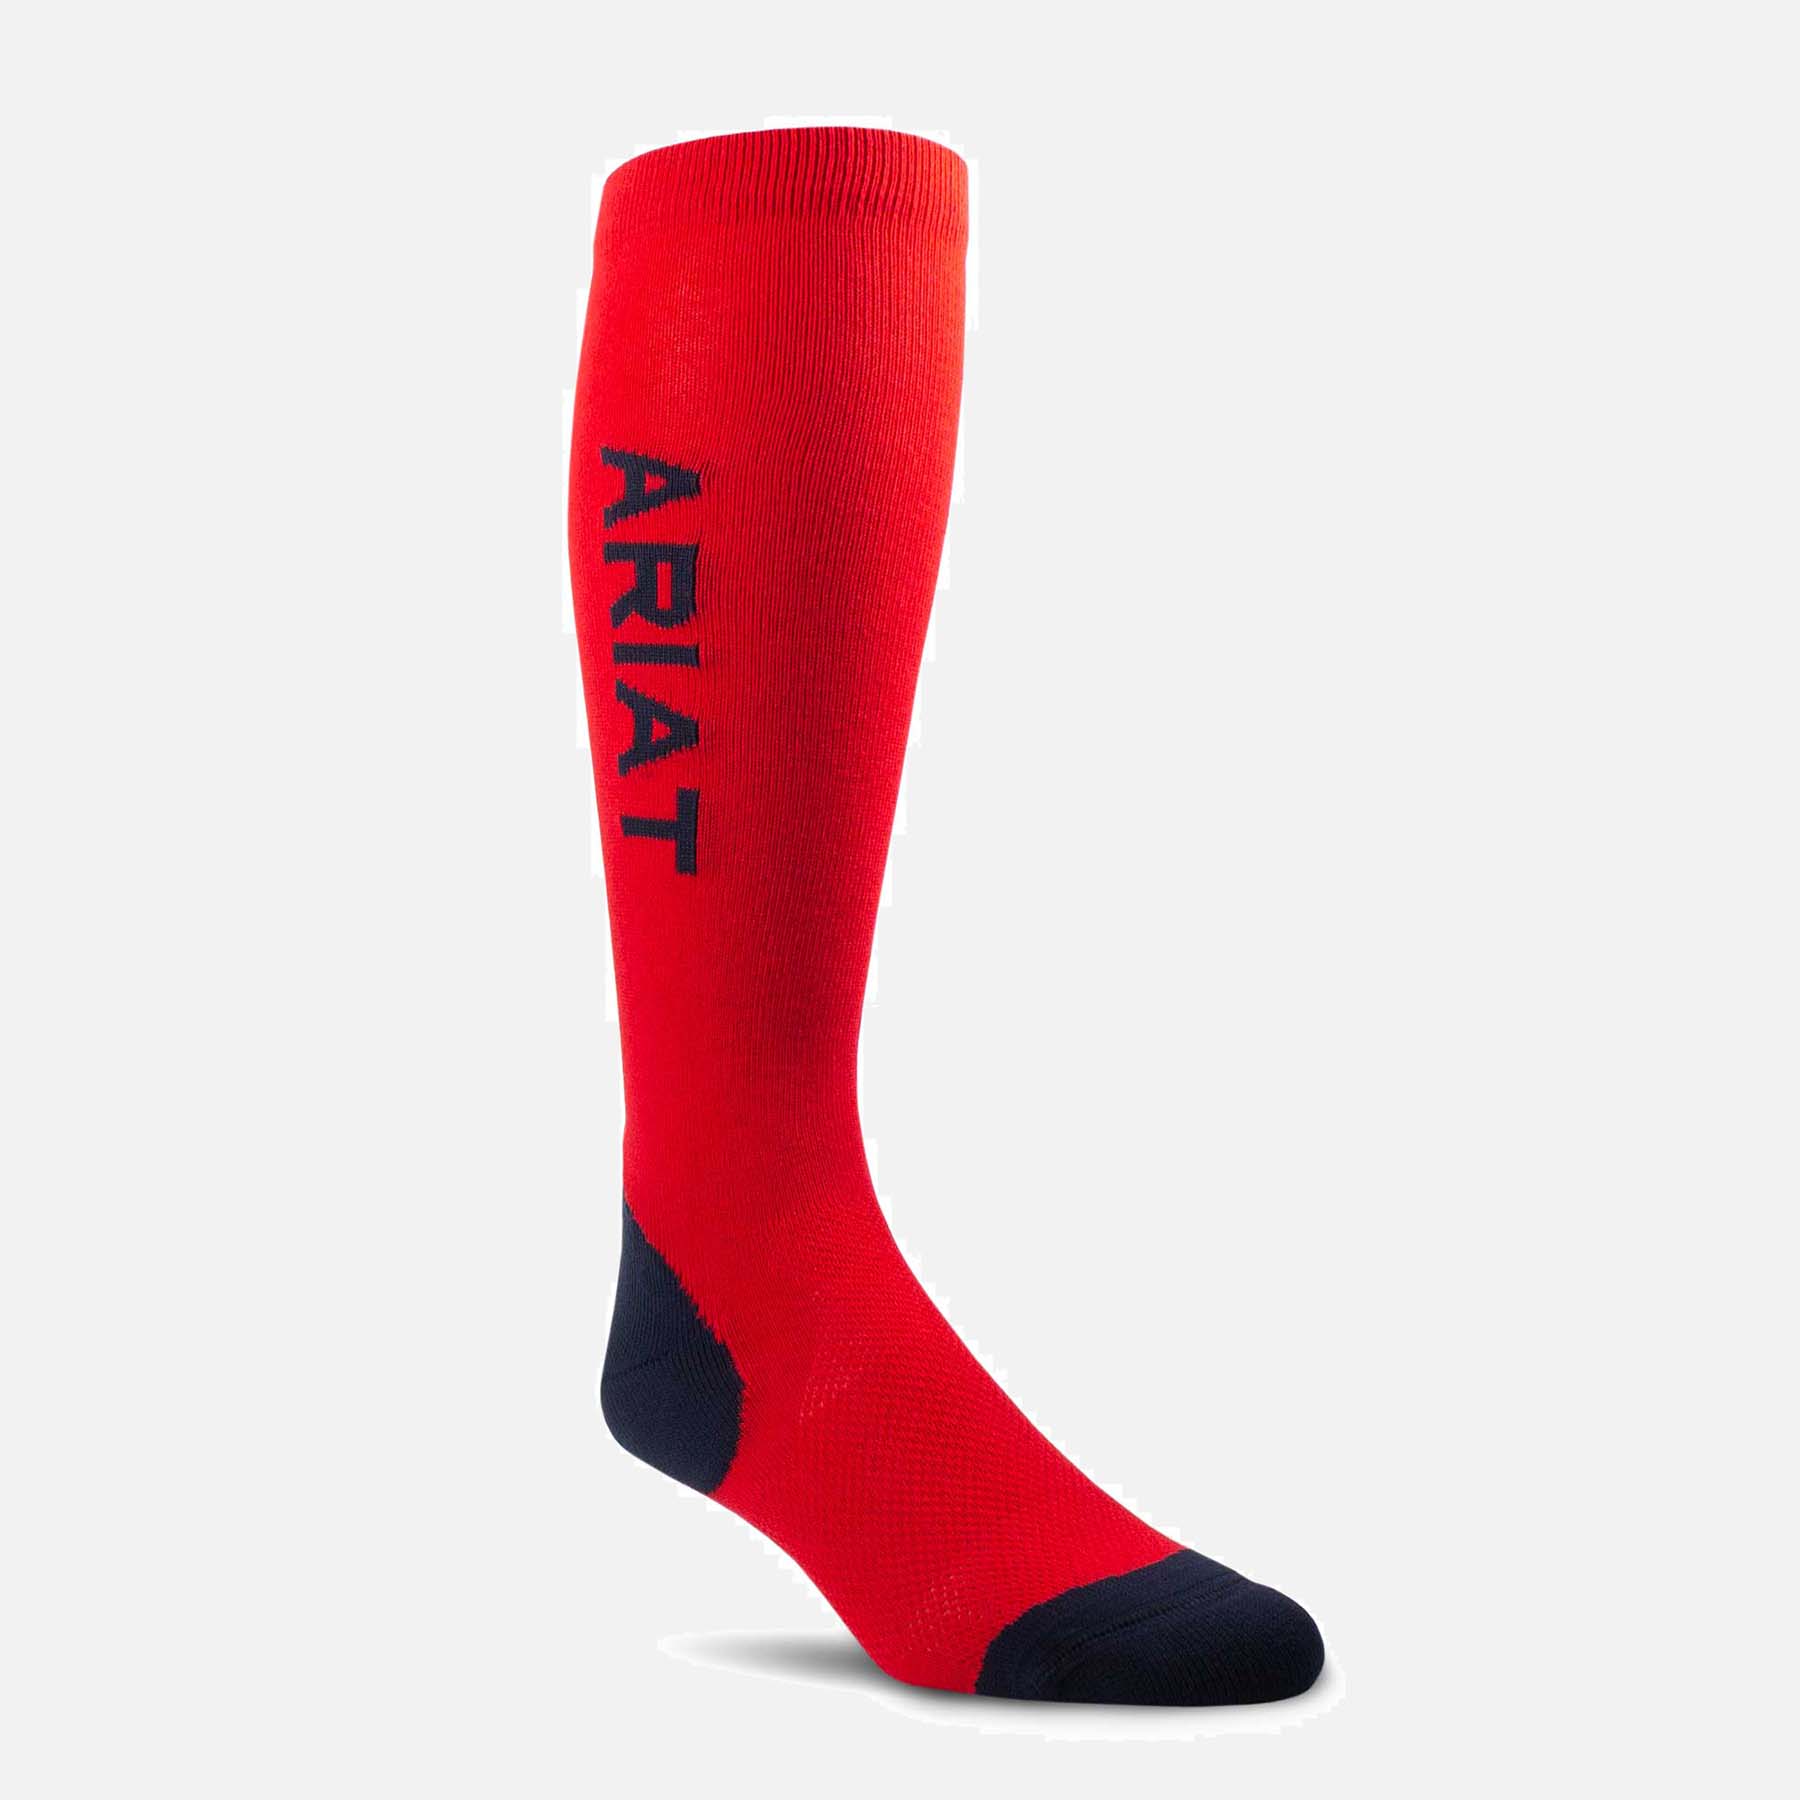 Ariat Tek Performance Socks in Red, side view showing Ariat logo in navy blue